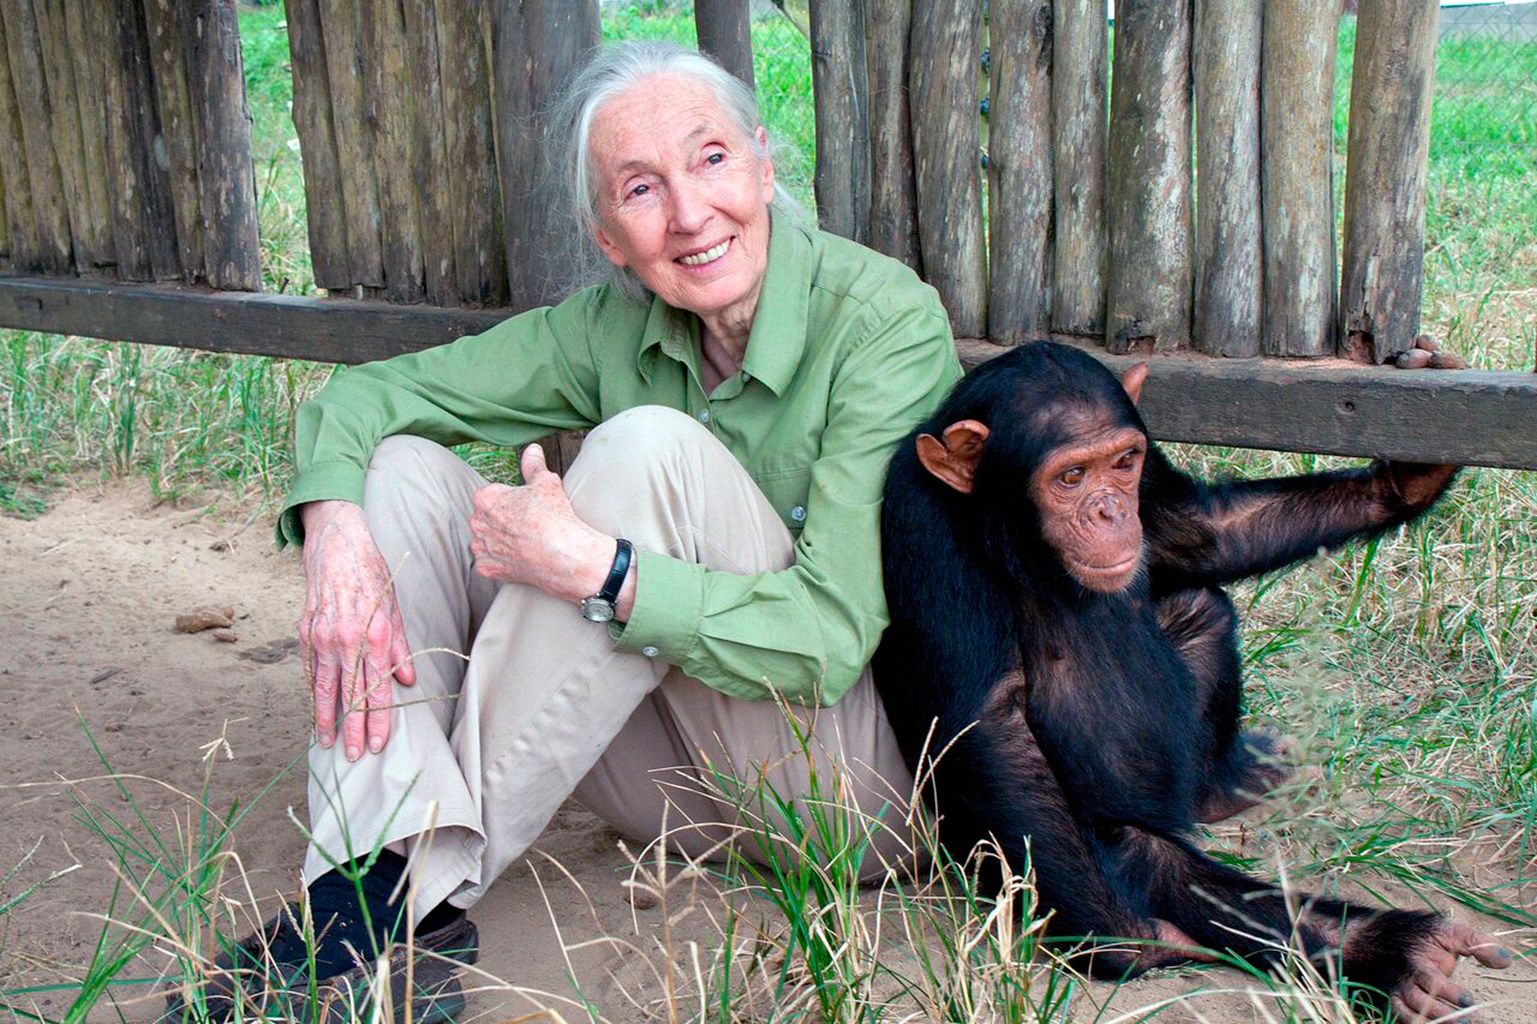 Common chimpanzee, Primate, Adaptation, Human, Wildlife, Smile, Jungle, Sitting, Orangutan, Zoo, 